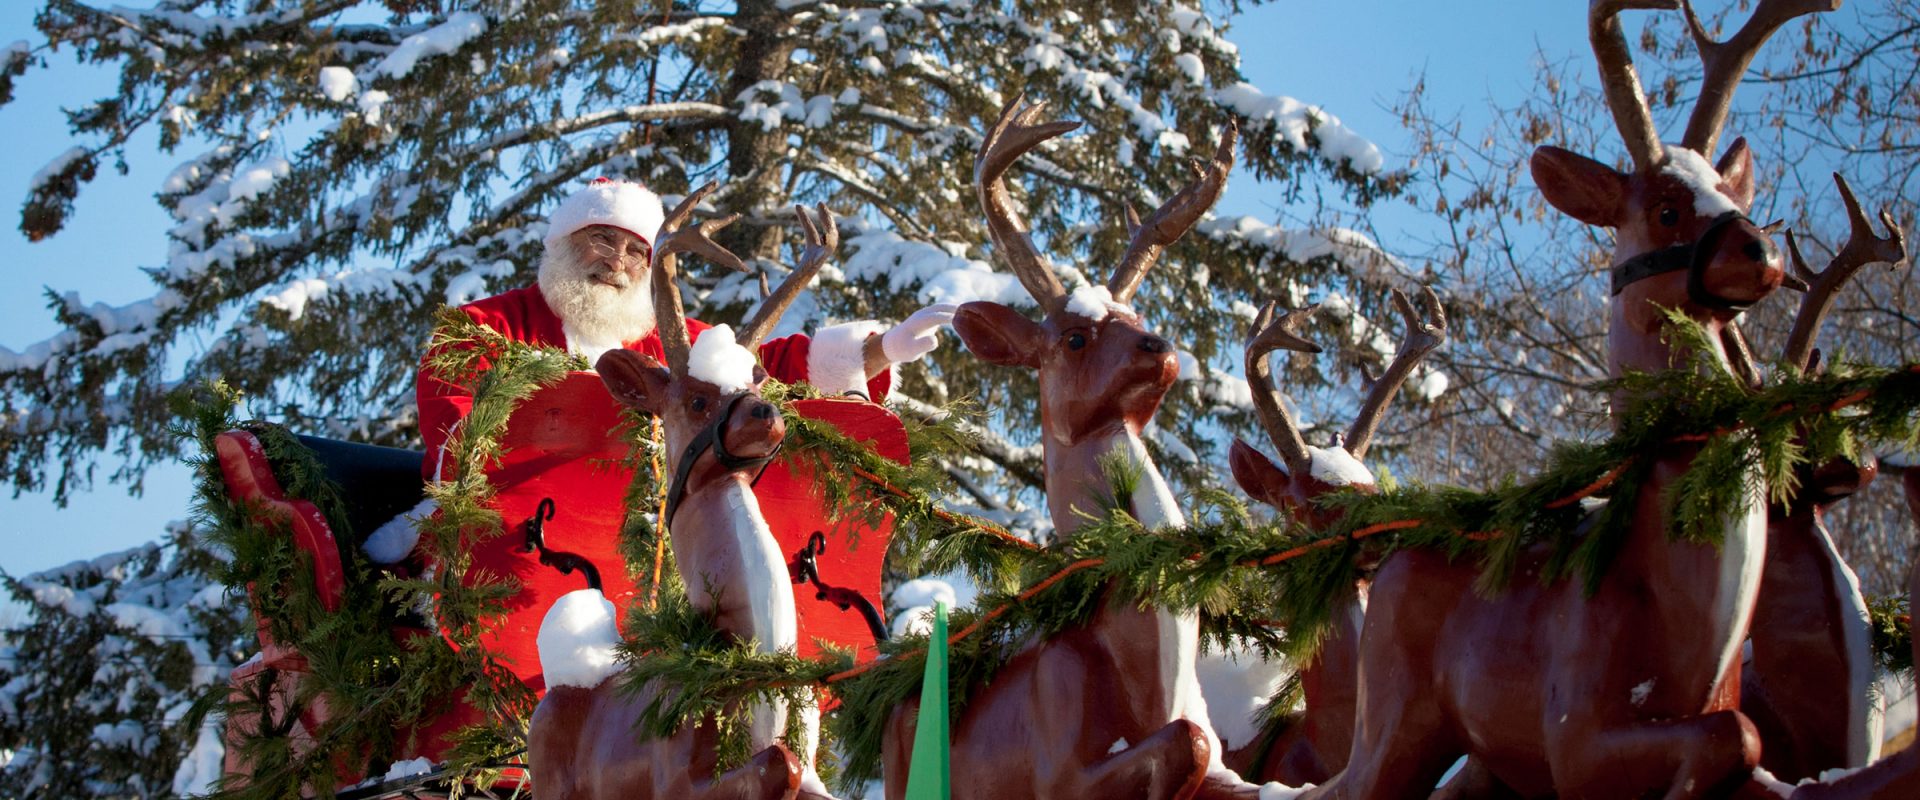 2019 Santa Claus Parades in Muskoka